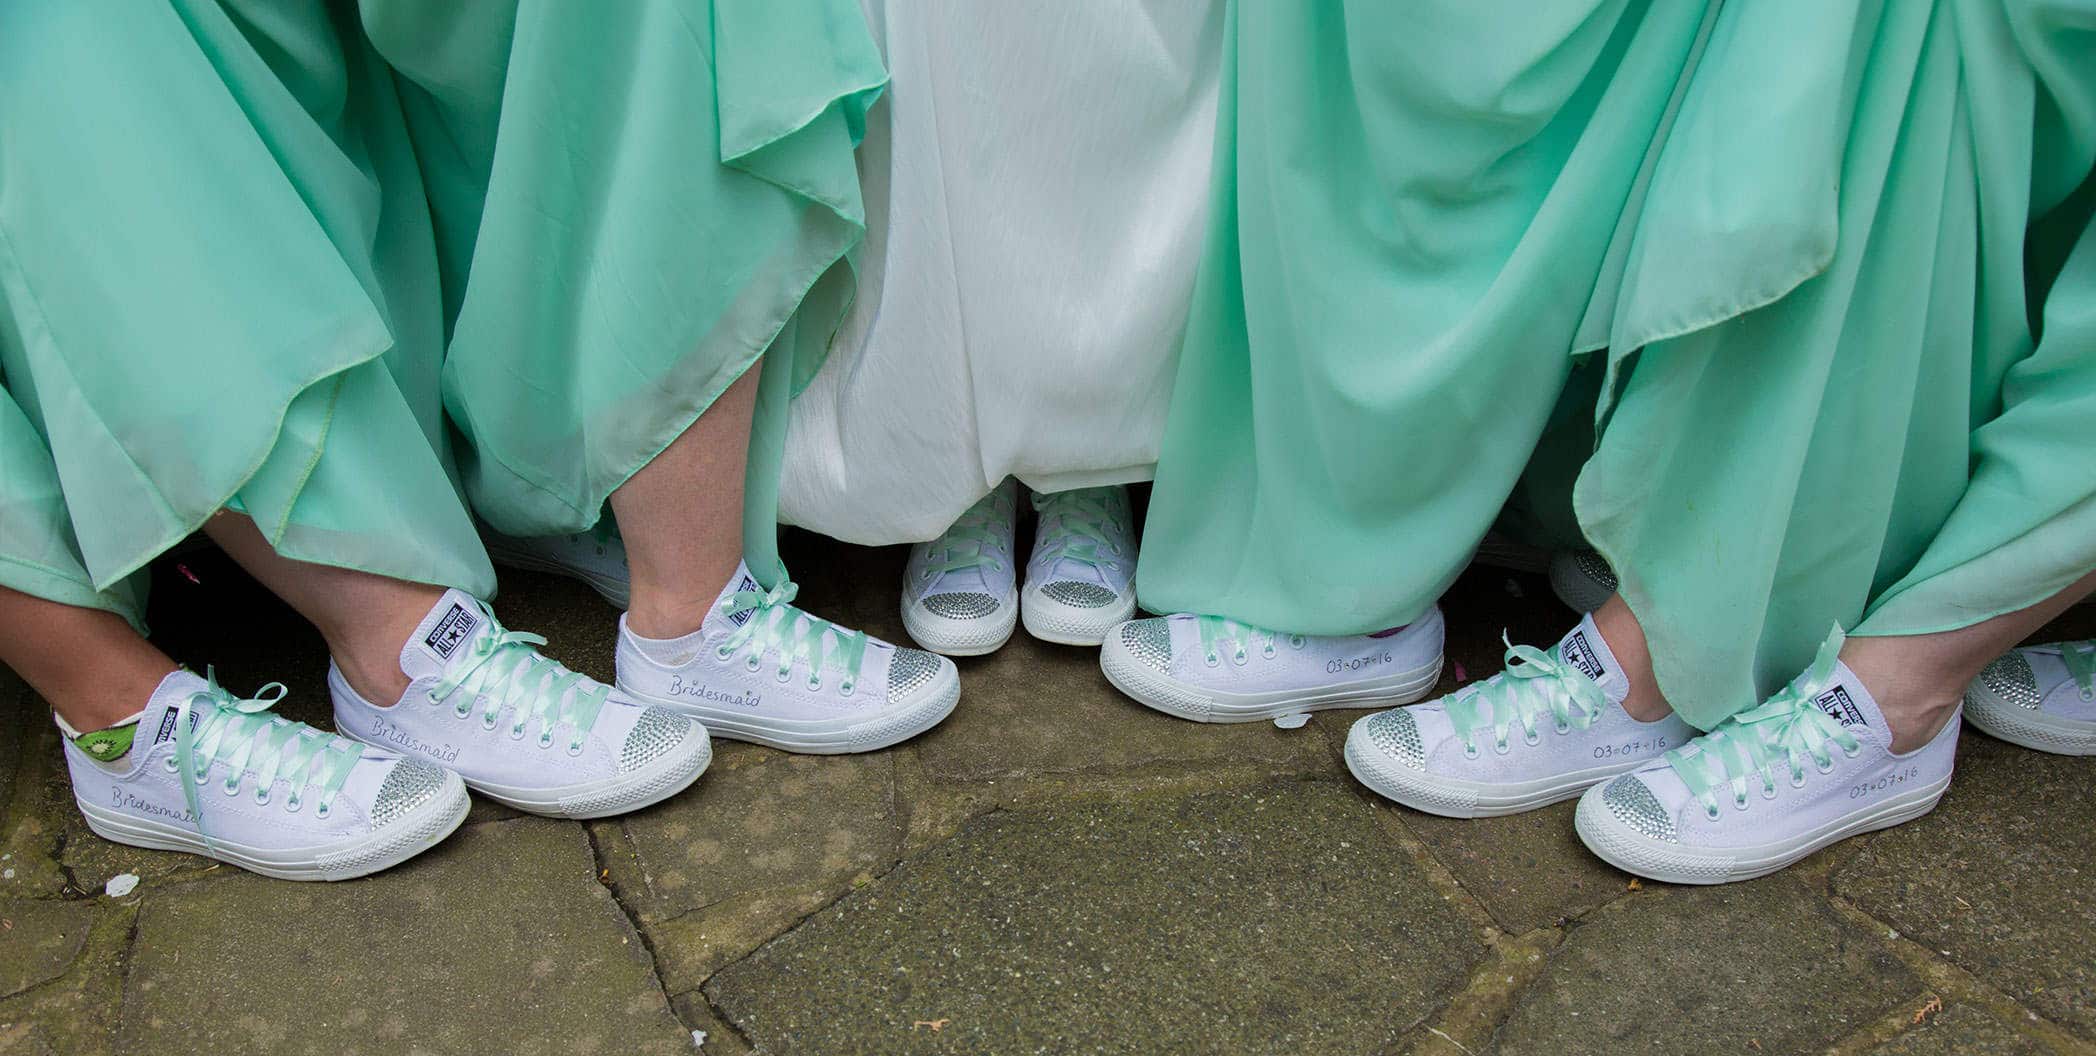 teal wedding shoes uk